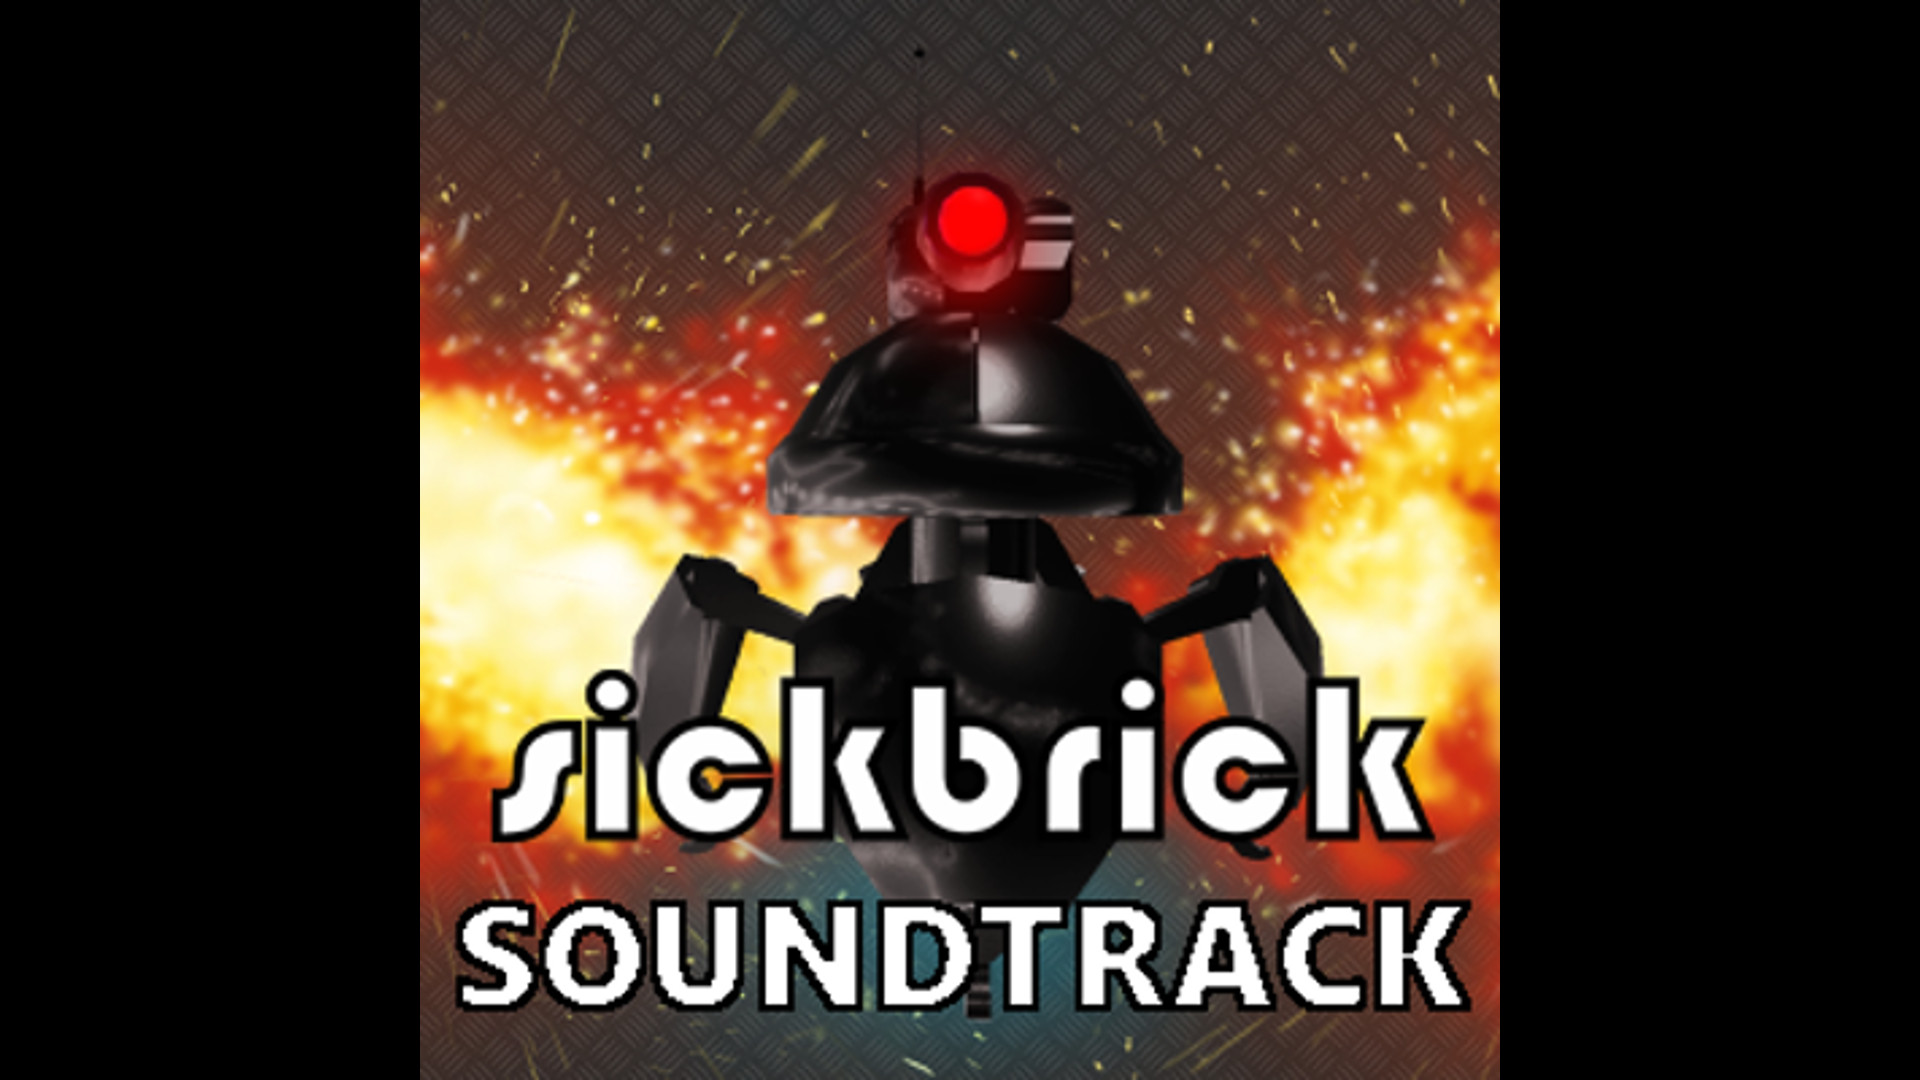 SickBrick - Soundtrack Featured Screenshot #1